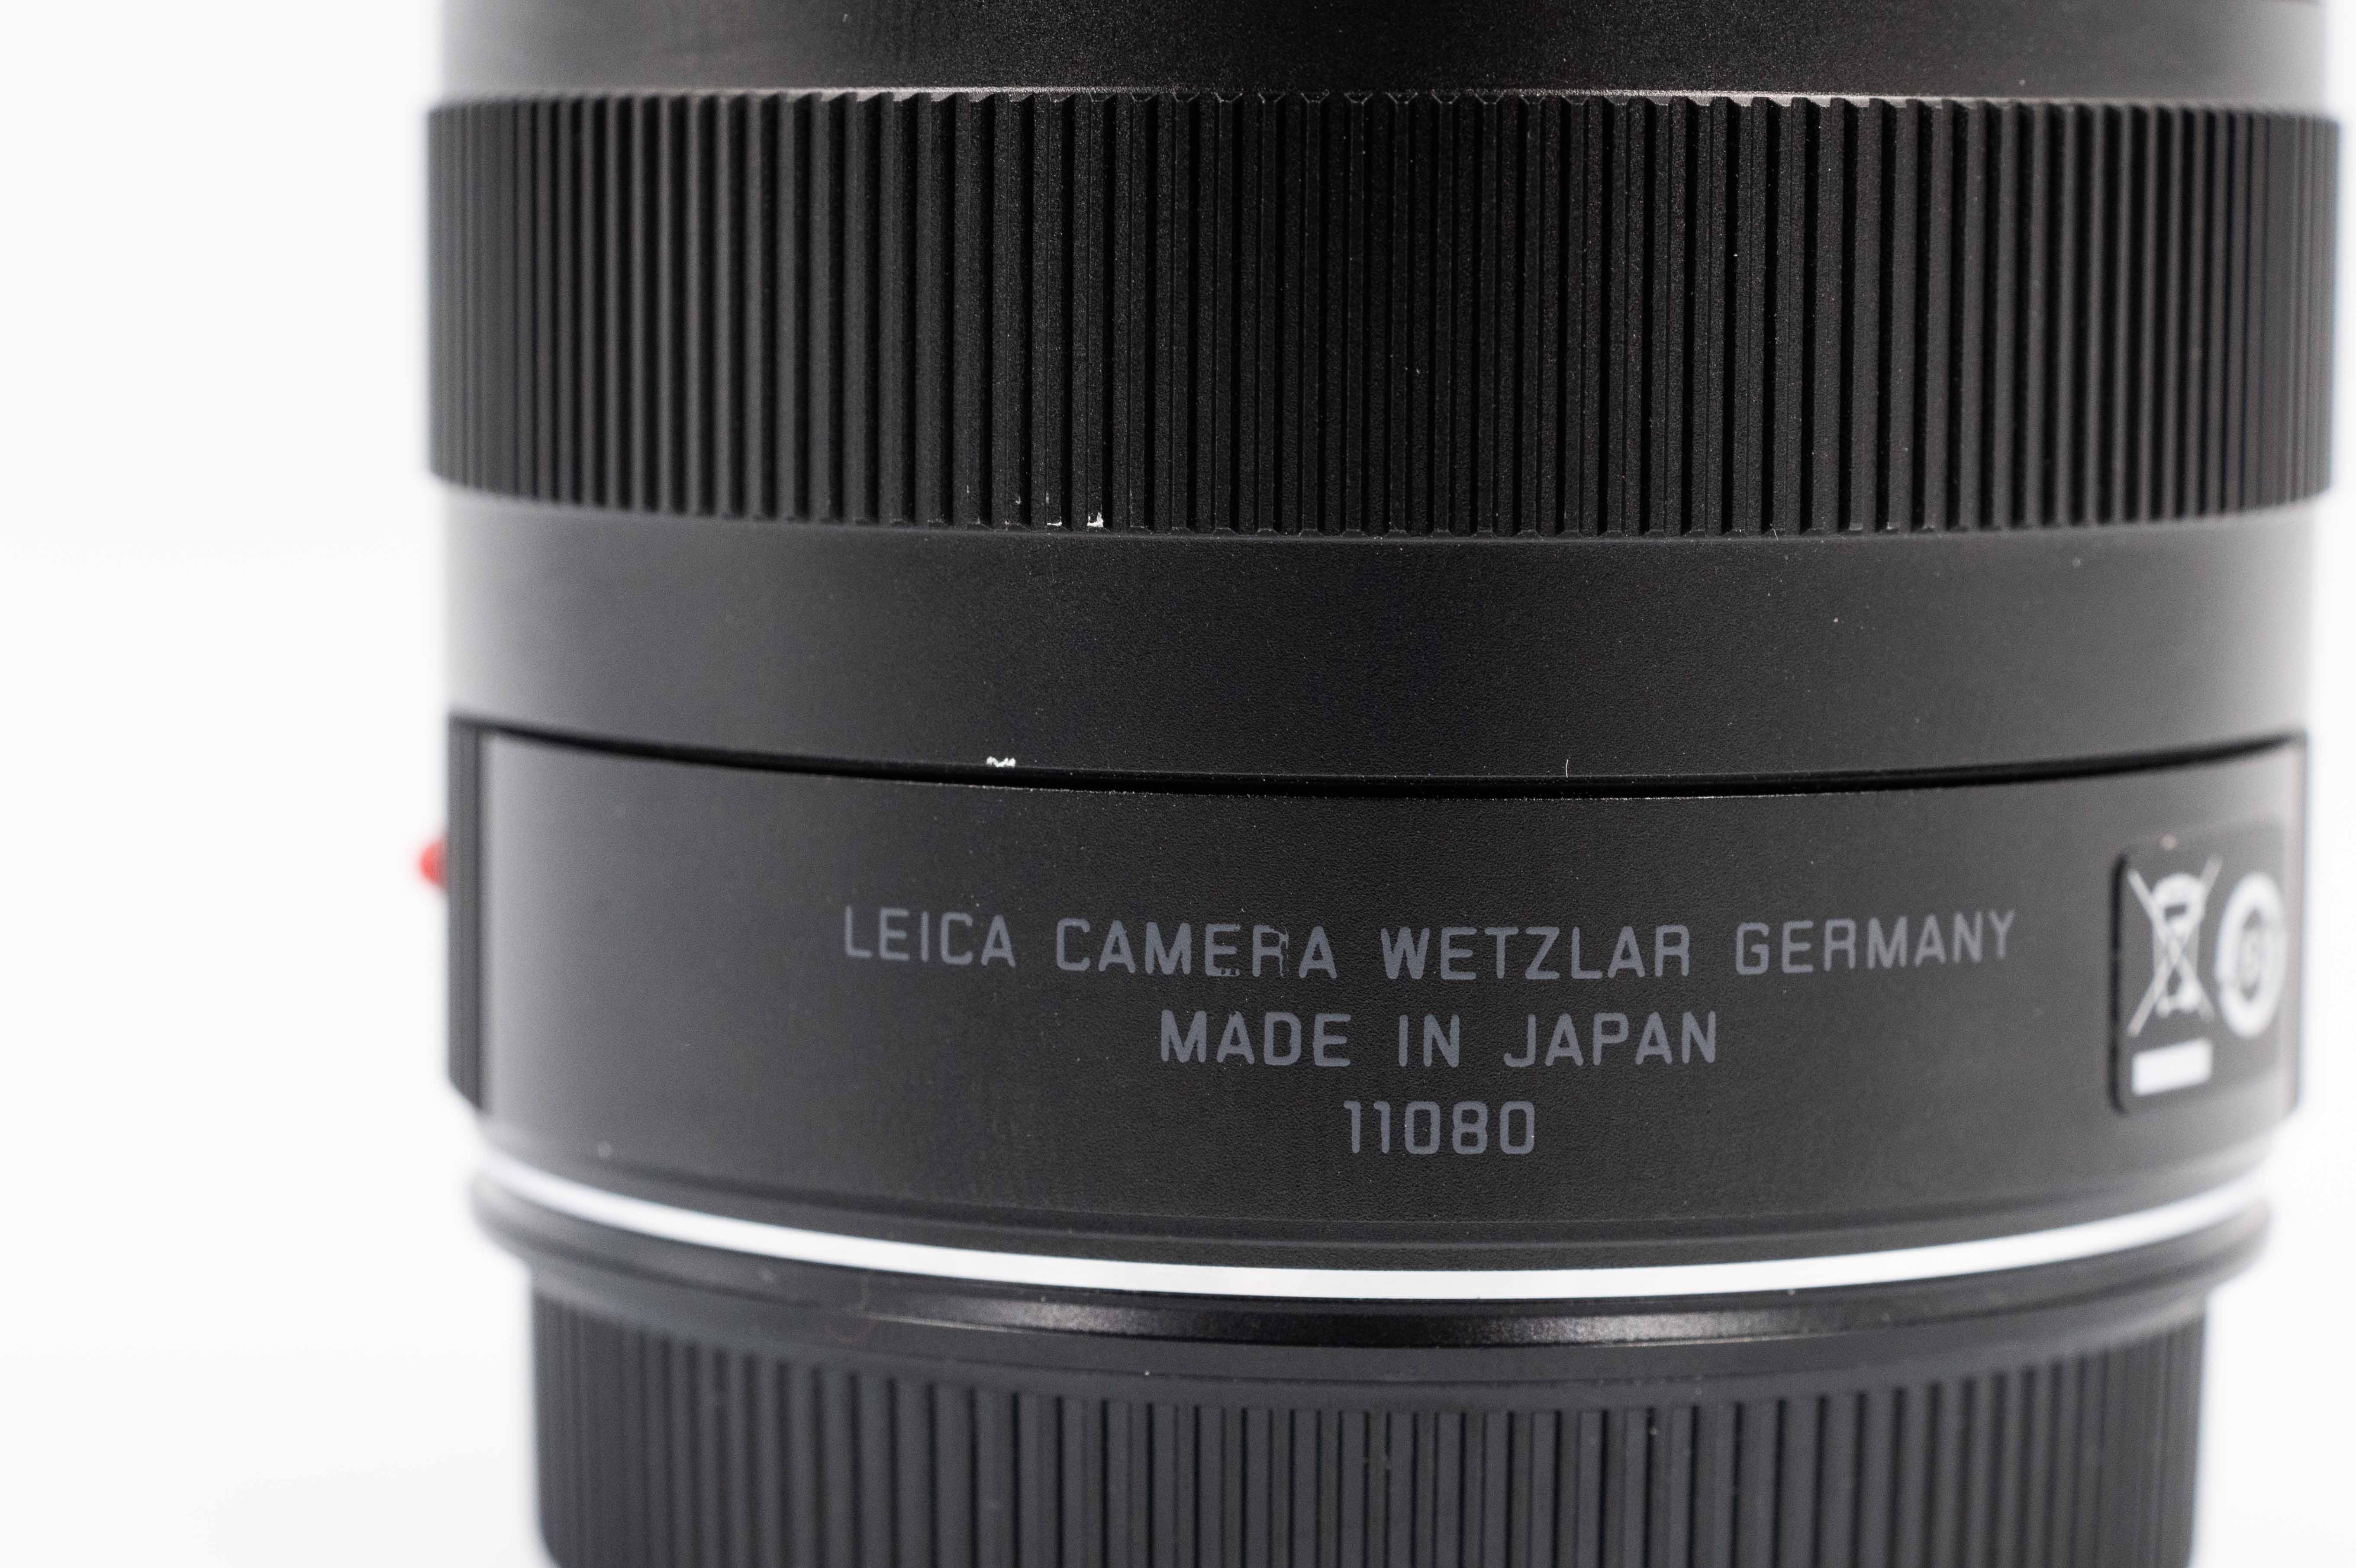 Leica Vario-Elmar-TL 18-56mm f/3.5-5.6 ASPH 11080